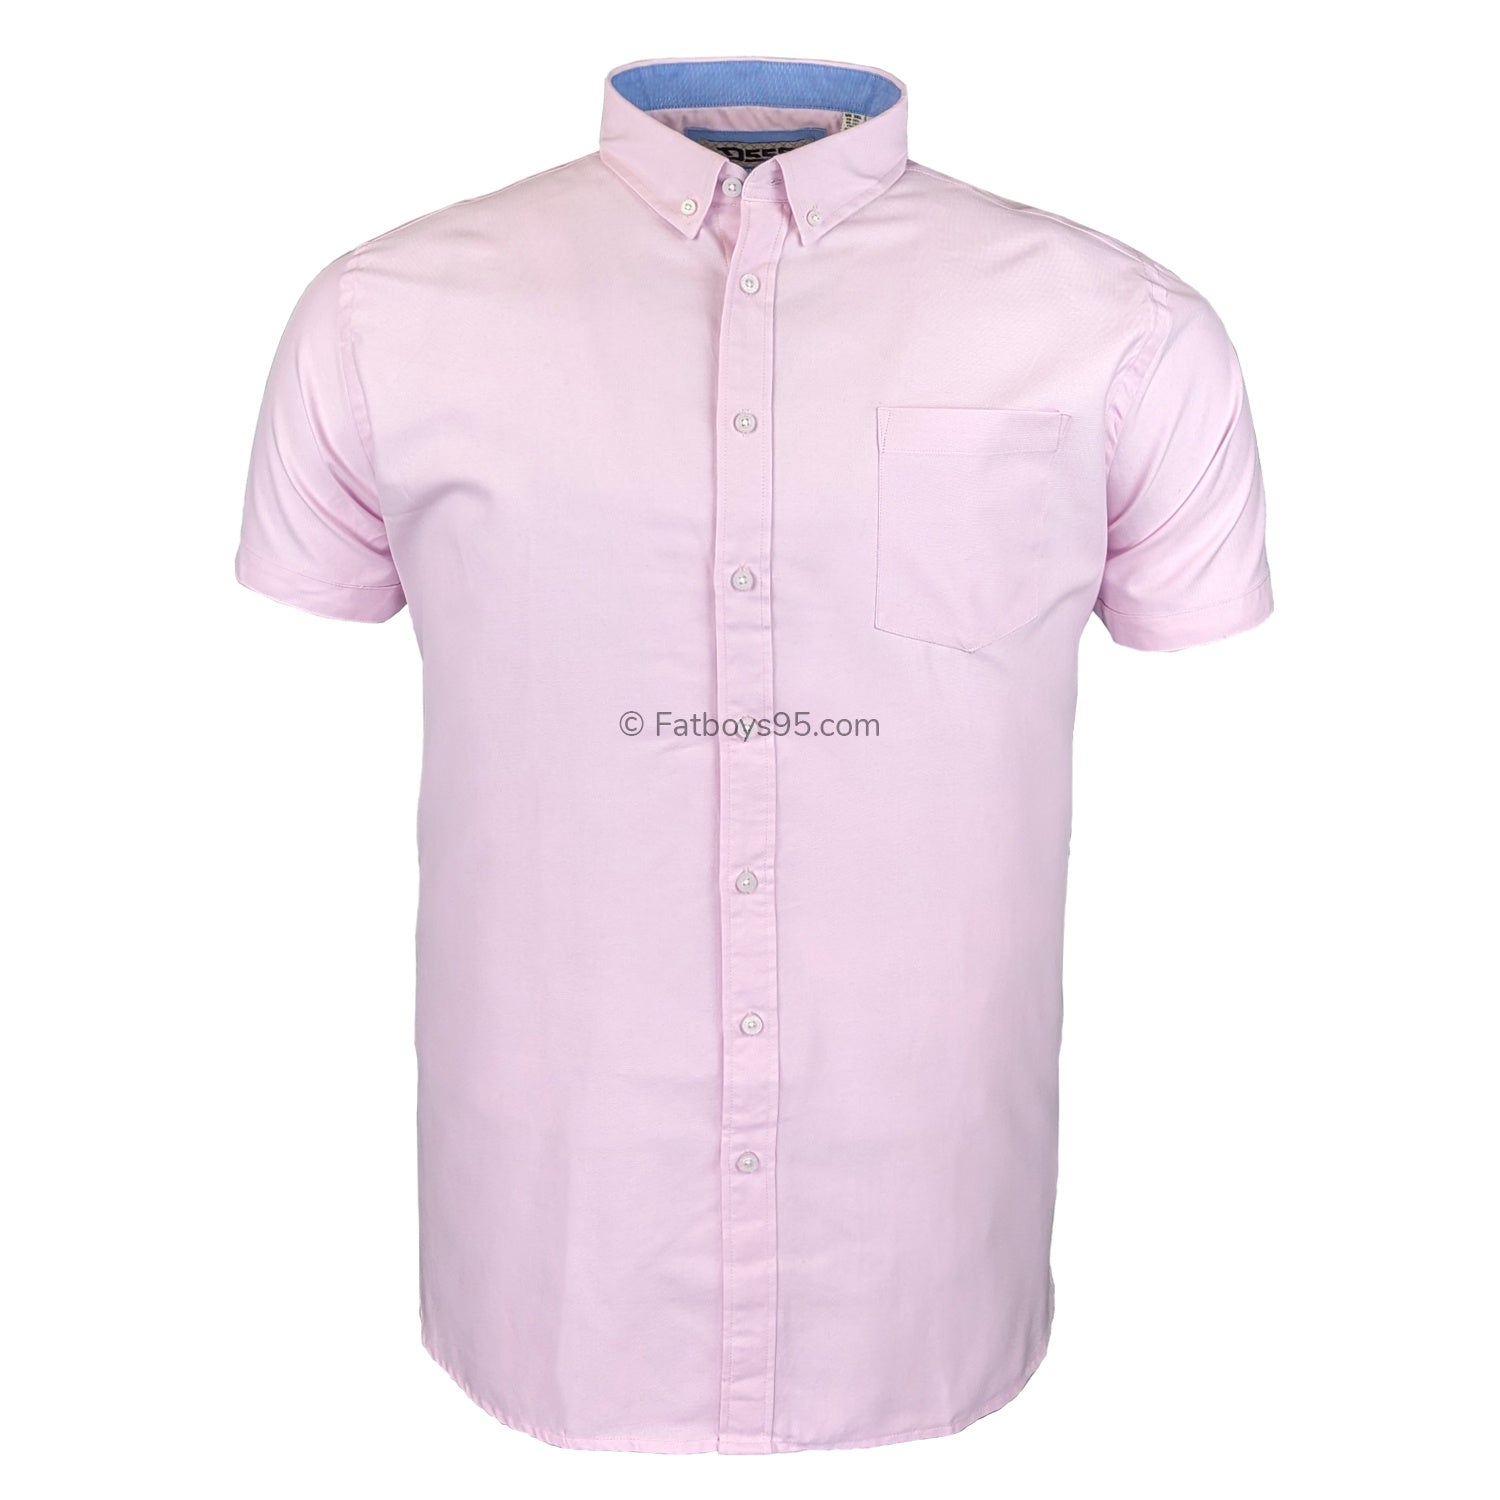 D555 S/S Oxford Shirt - James - Pink 1